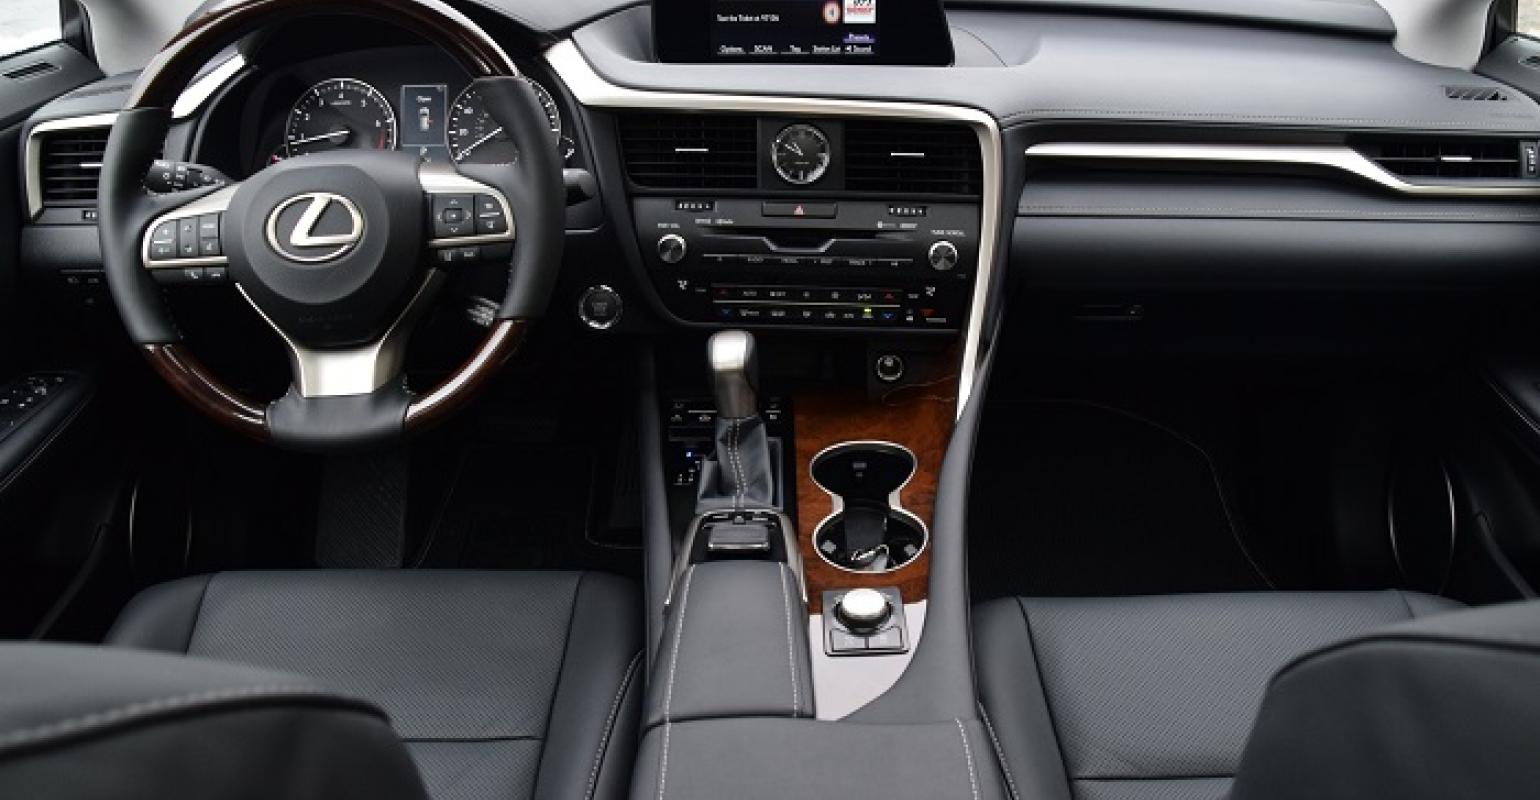 Lexus Rx Luxury Cuv Has Winning Interior Wardsauto